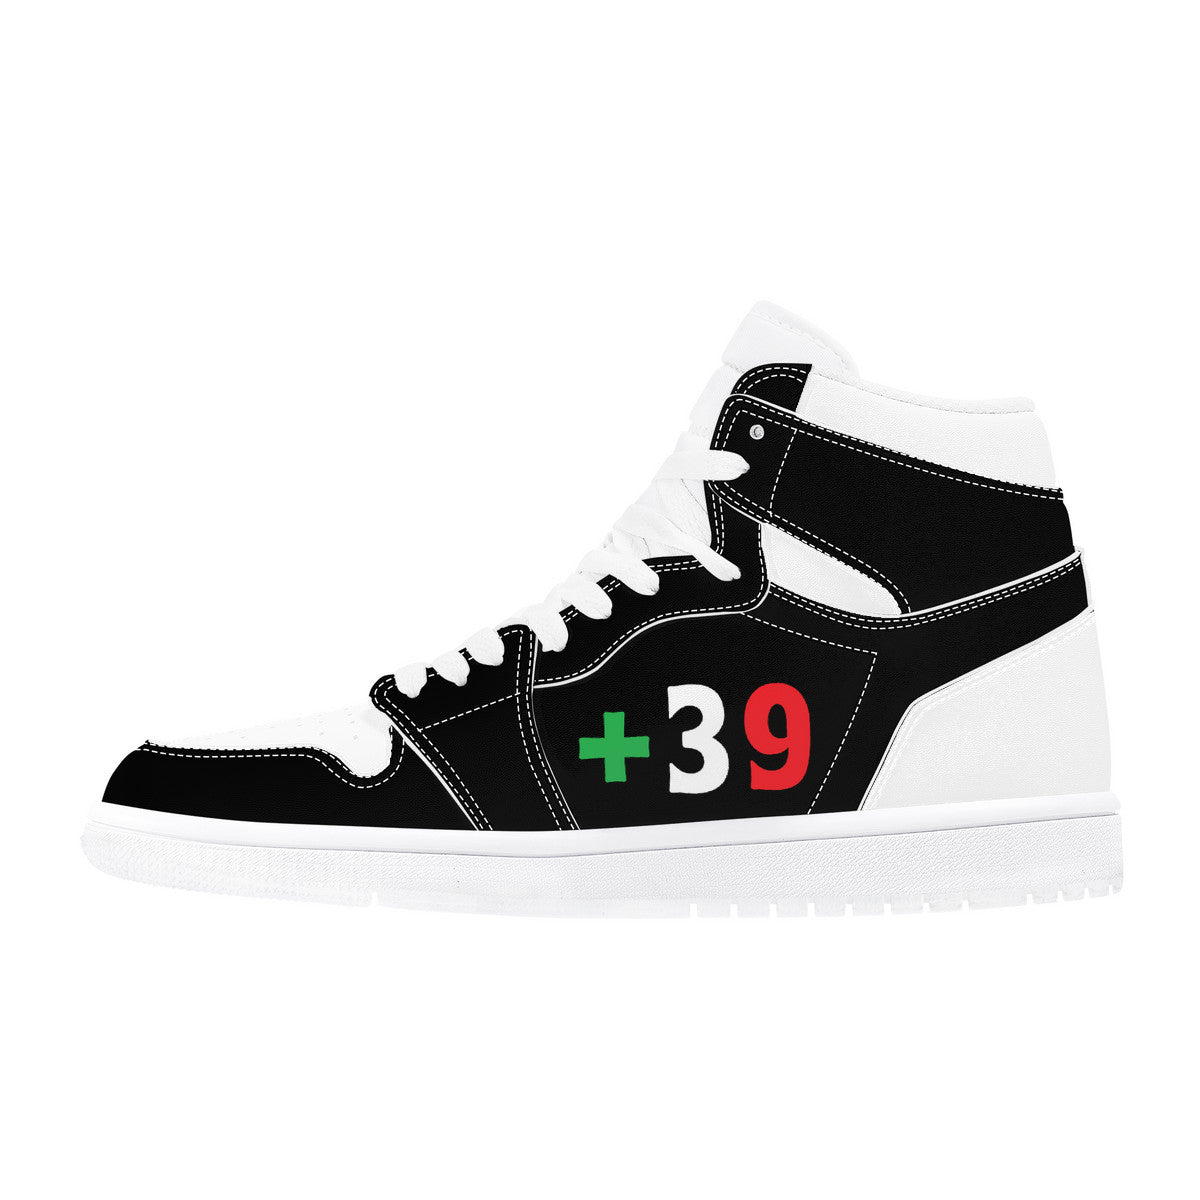 Italia +39 High Top Leather Sneaker